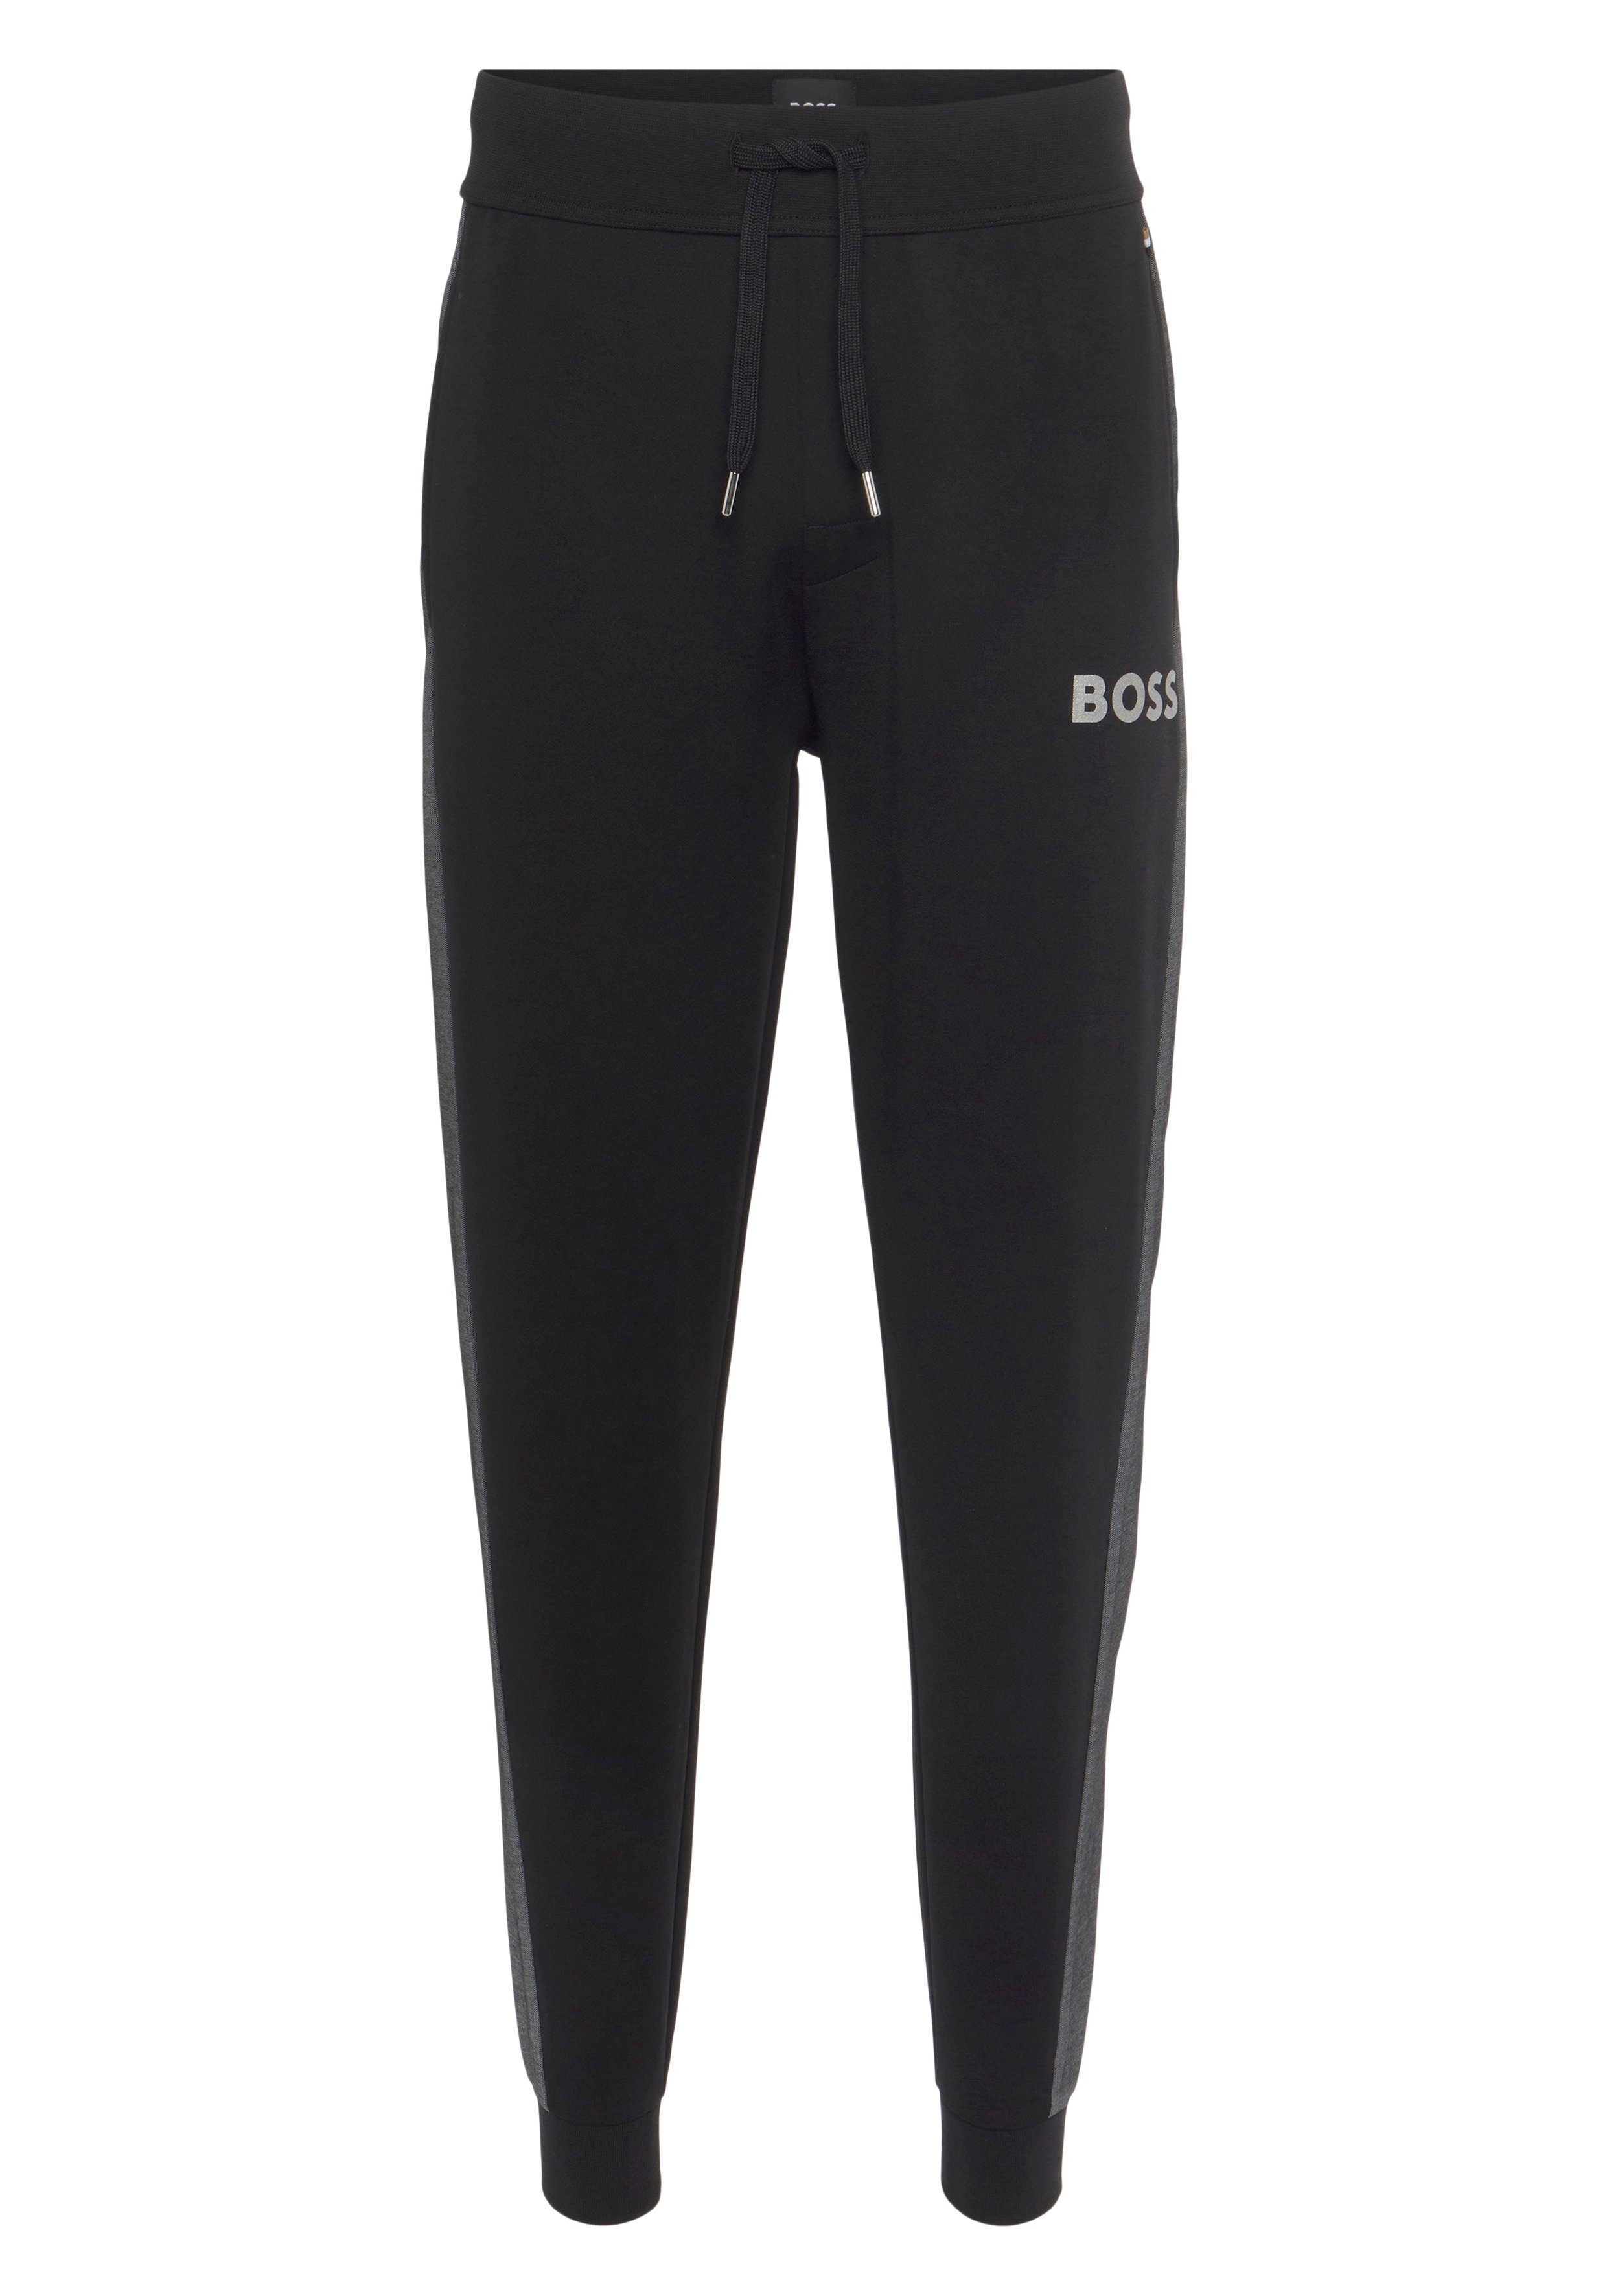 BOSS Homewearhose Tracksuit Pants 10166548 22 mit kontrastfarbenem Seitenstreifen Black | Sweathosen